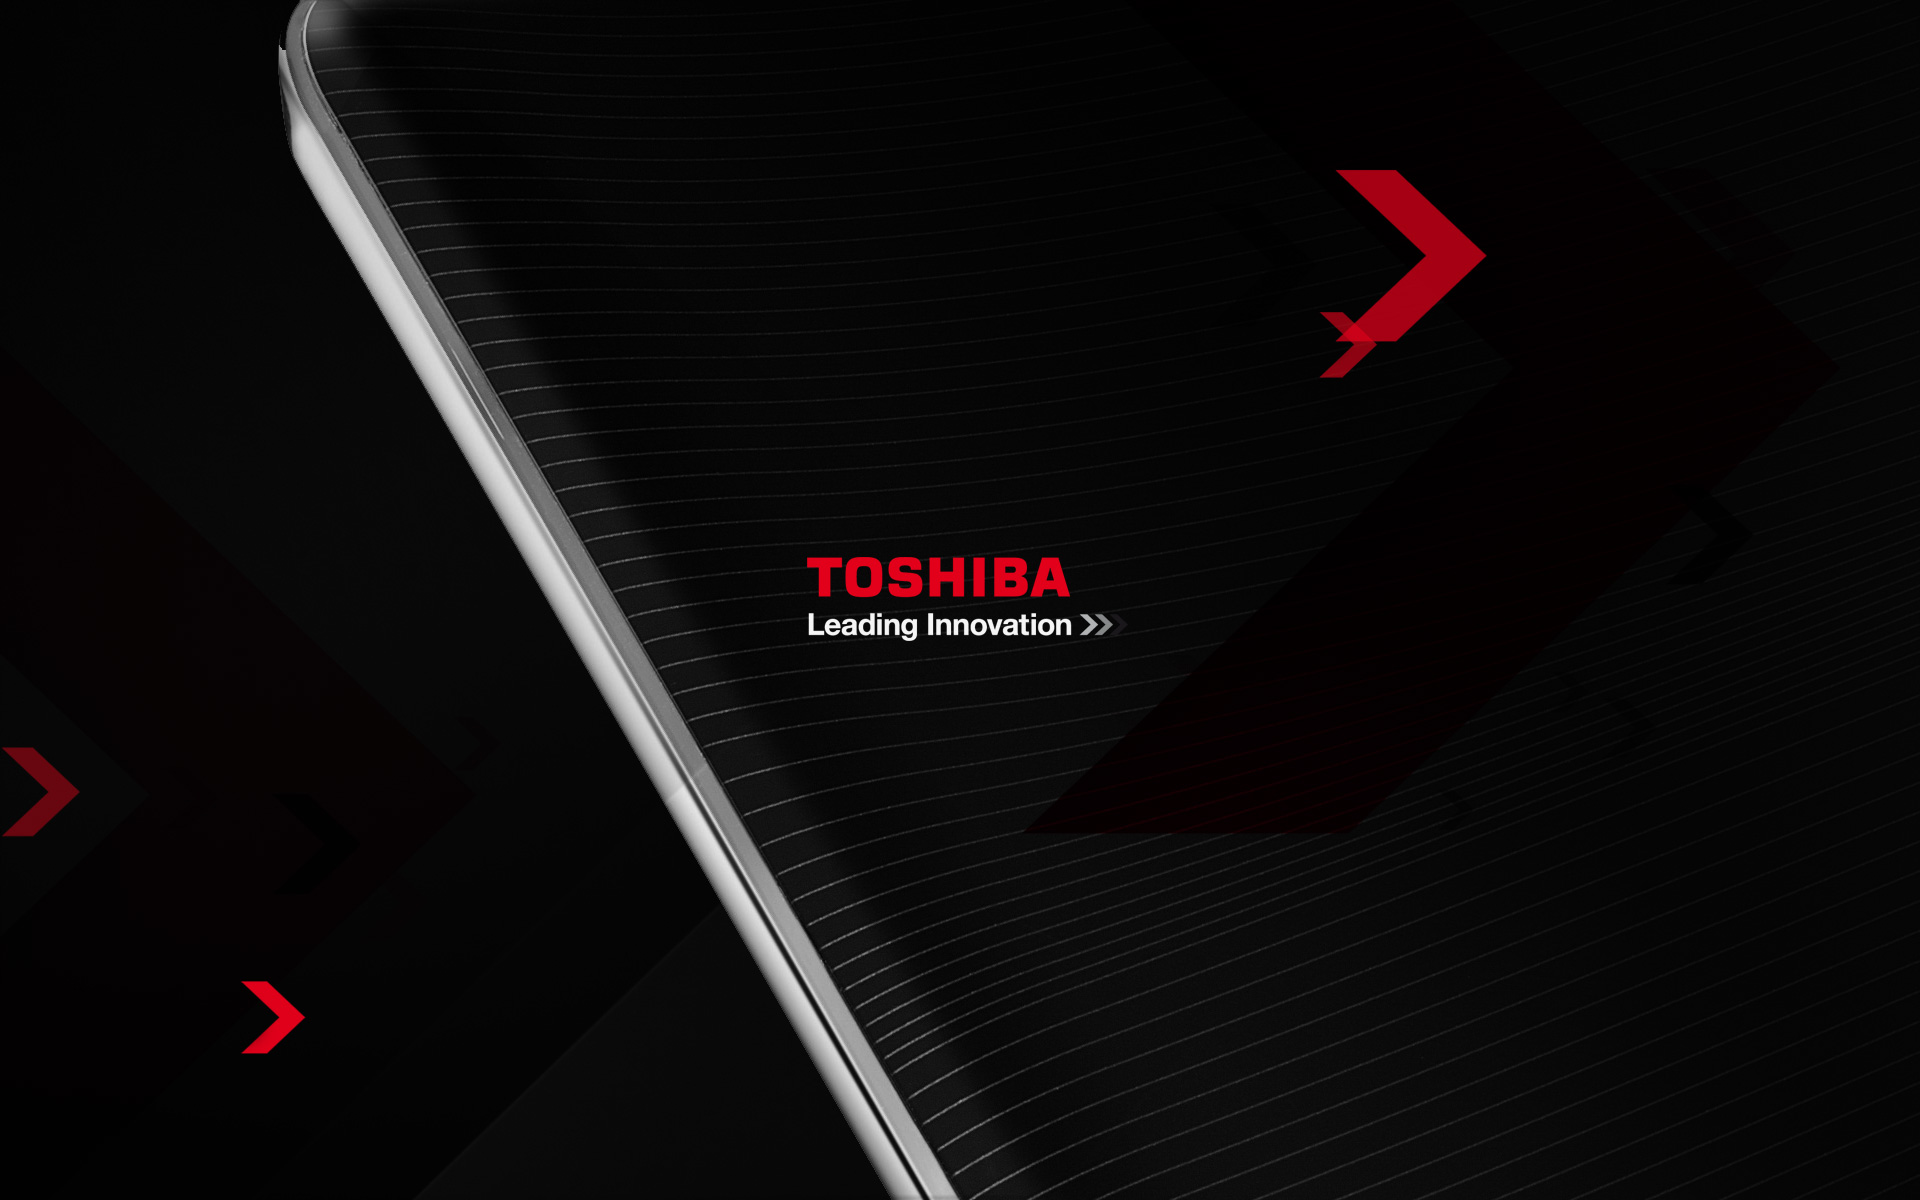 Toshiba Puter Wallpaper